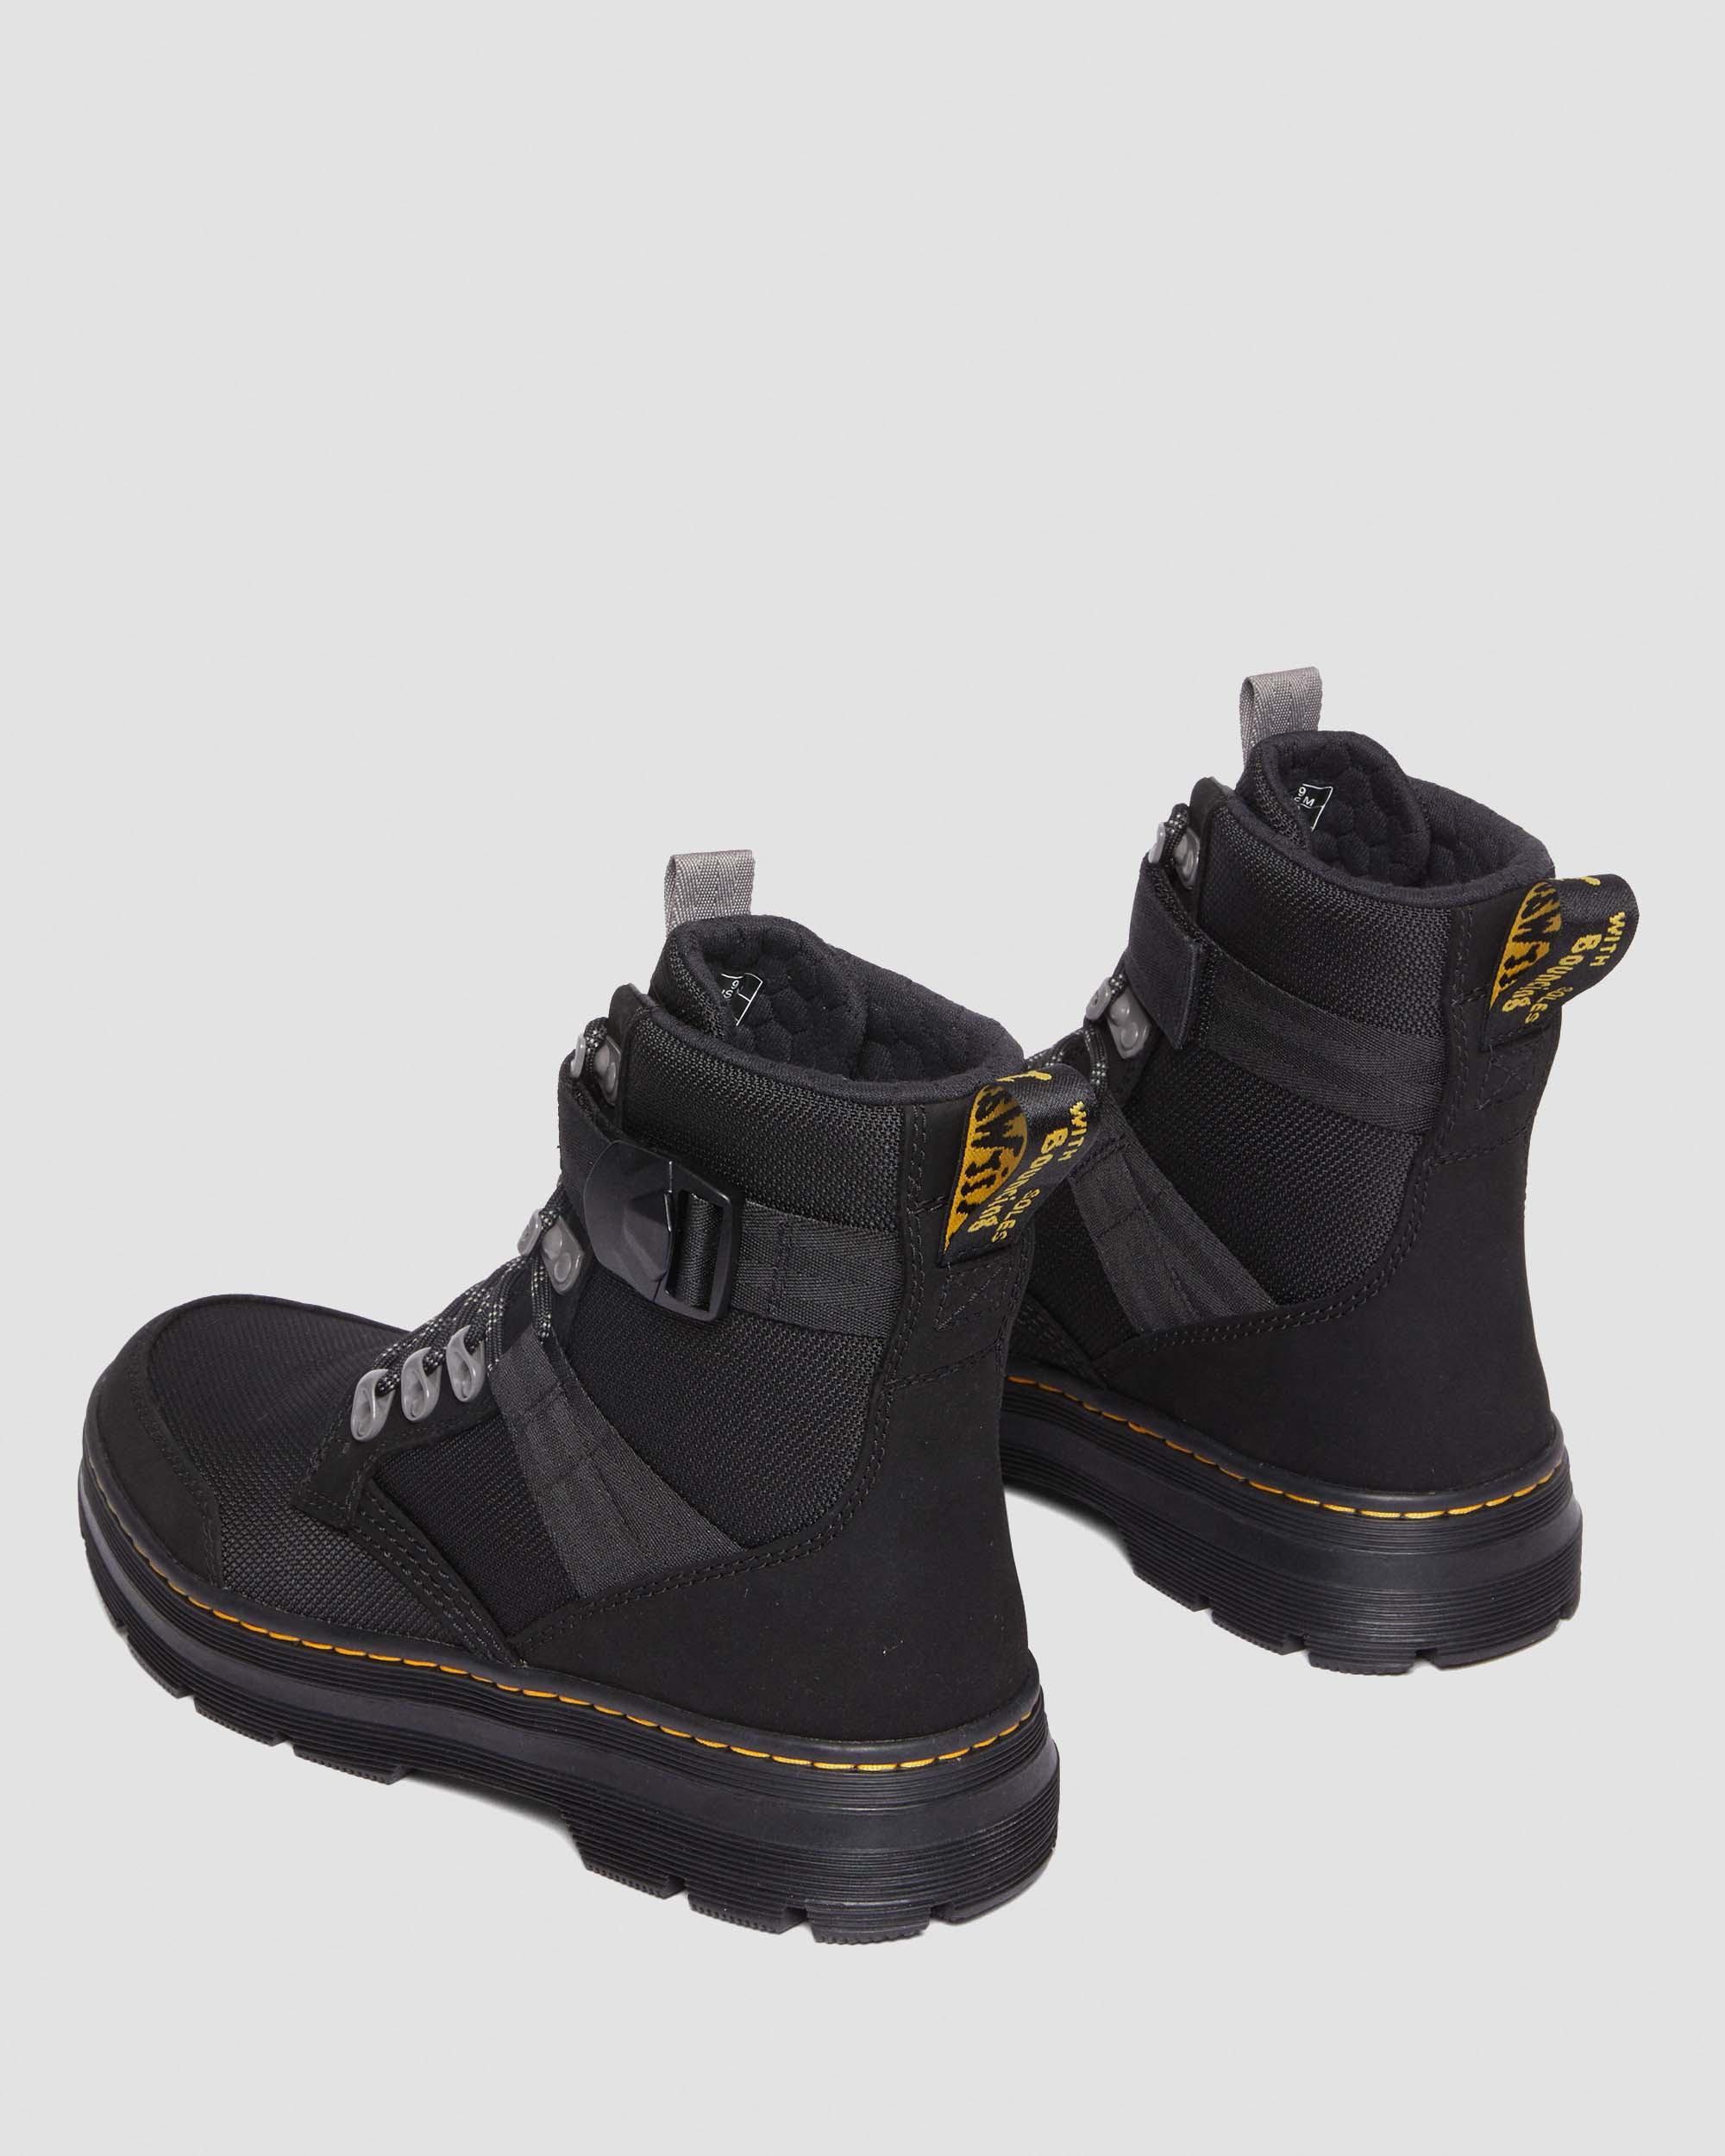 Combs Tech II Fleece-Lined Casual Boots in BLACK